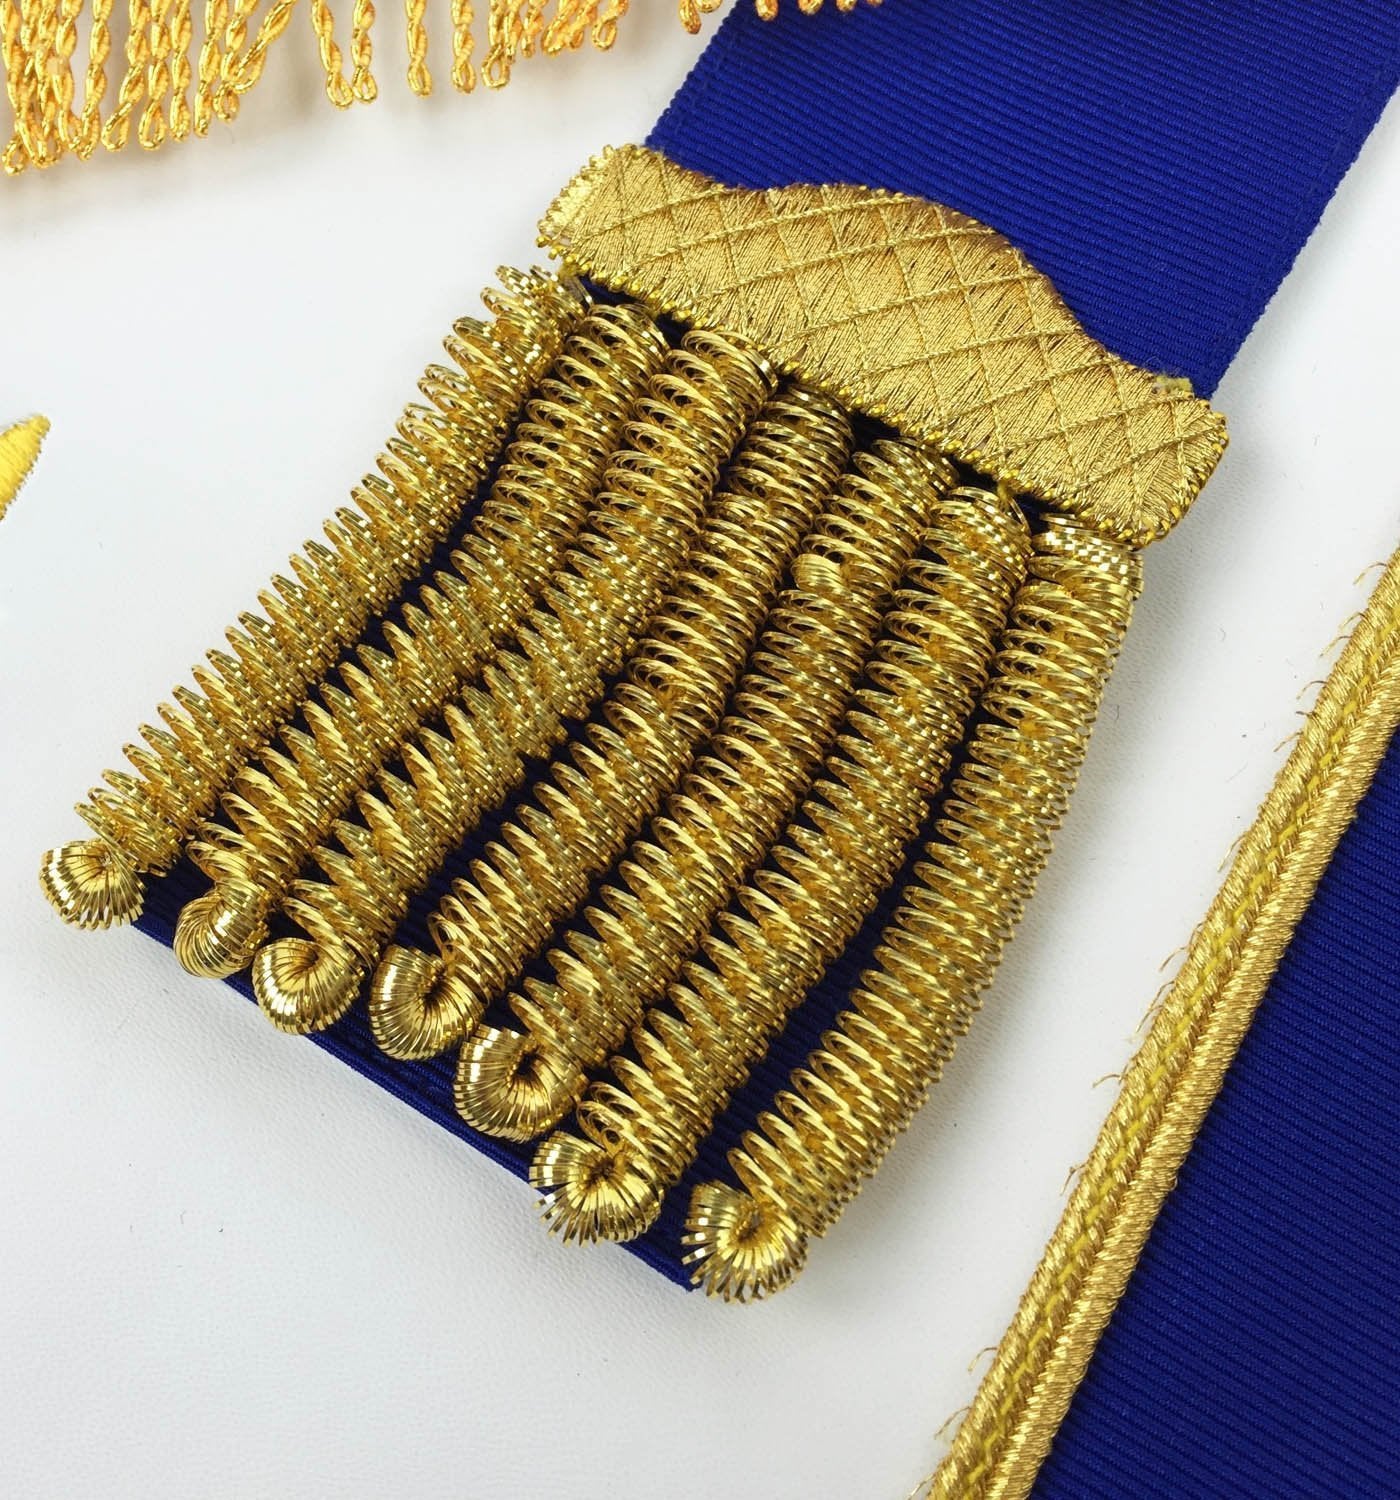 Master Mason Blue Lodge Regalia Set - Royal Blue & Gold Machine Embroidery - Bricks Masons